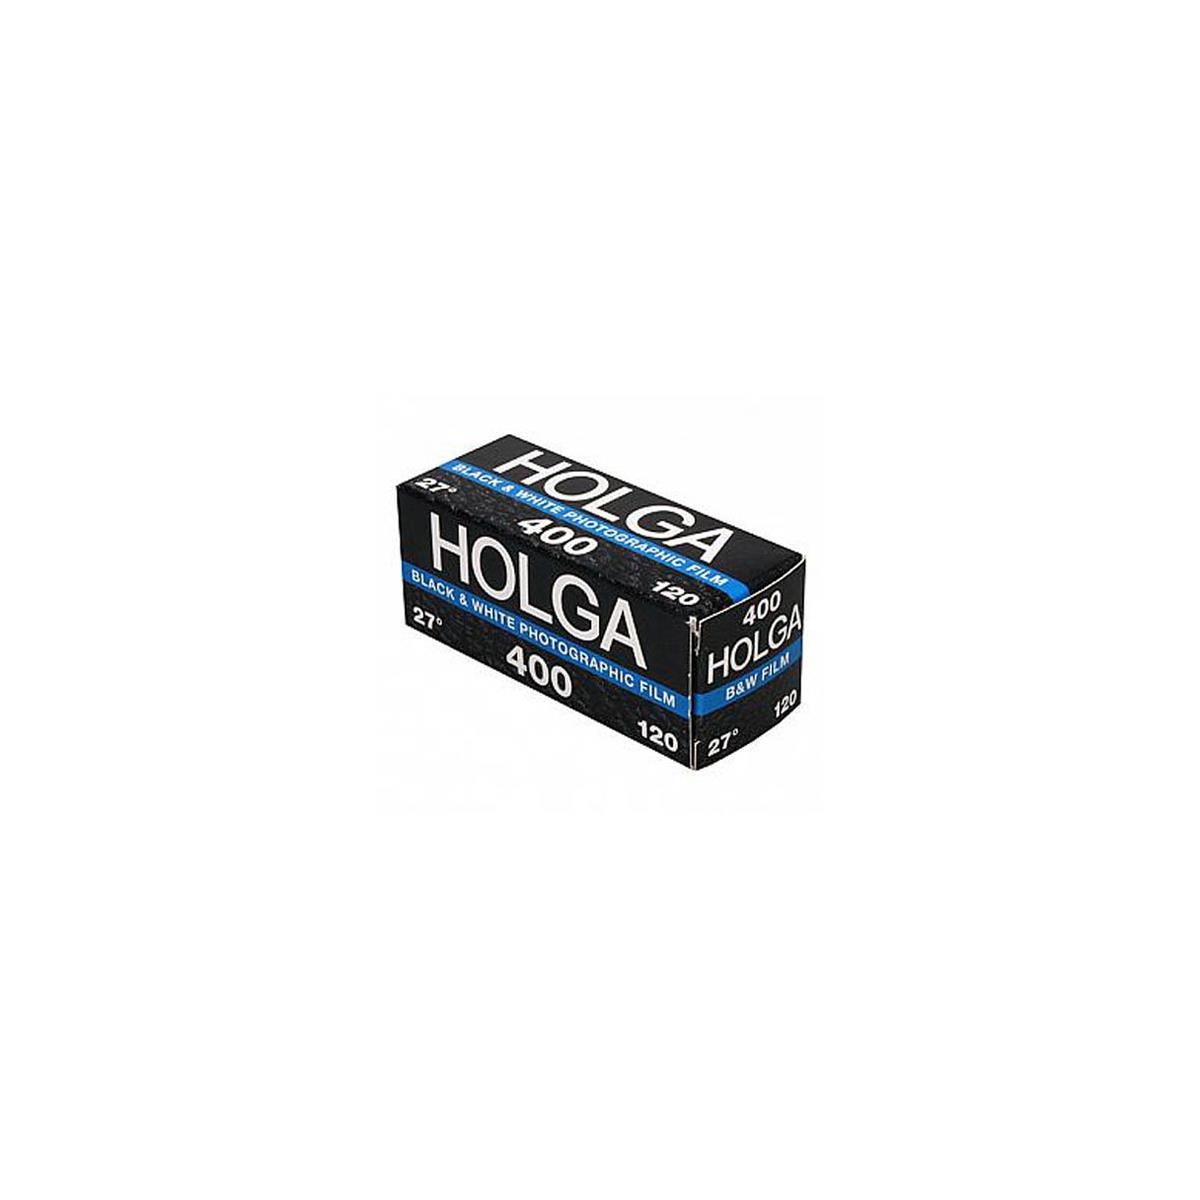 Image of Holga 120 Black and White Film